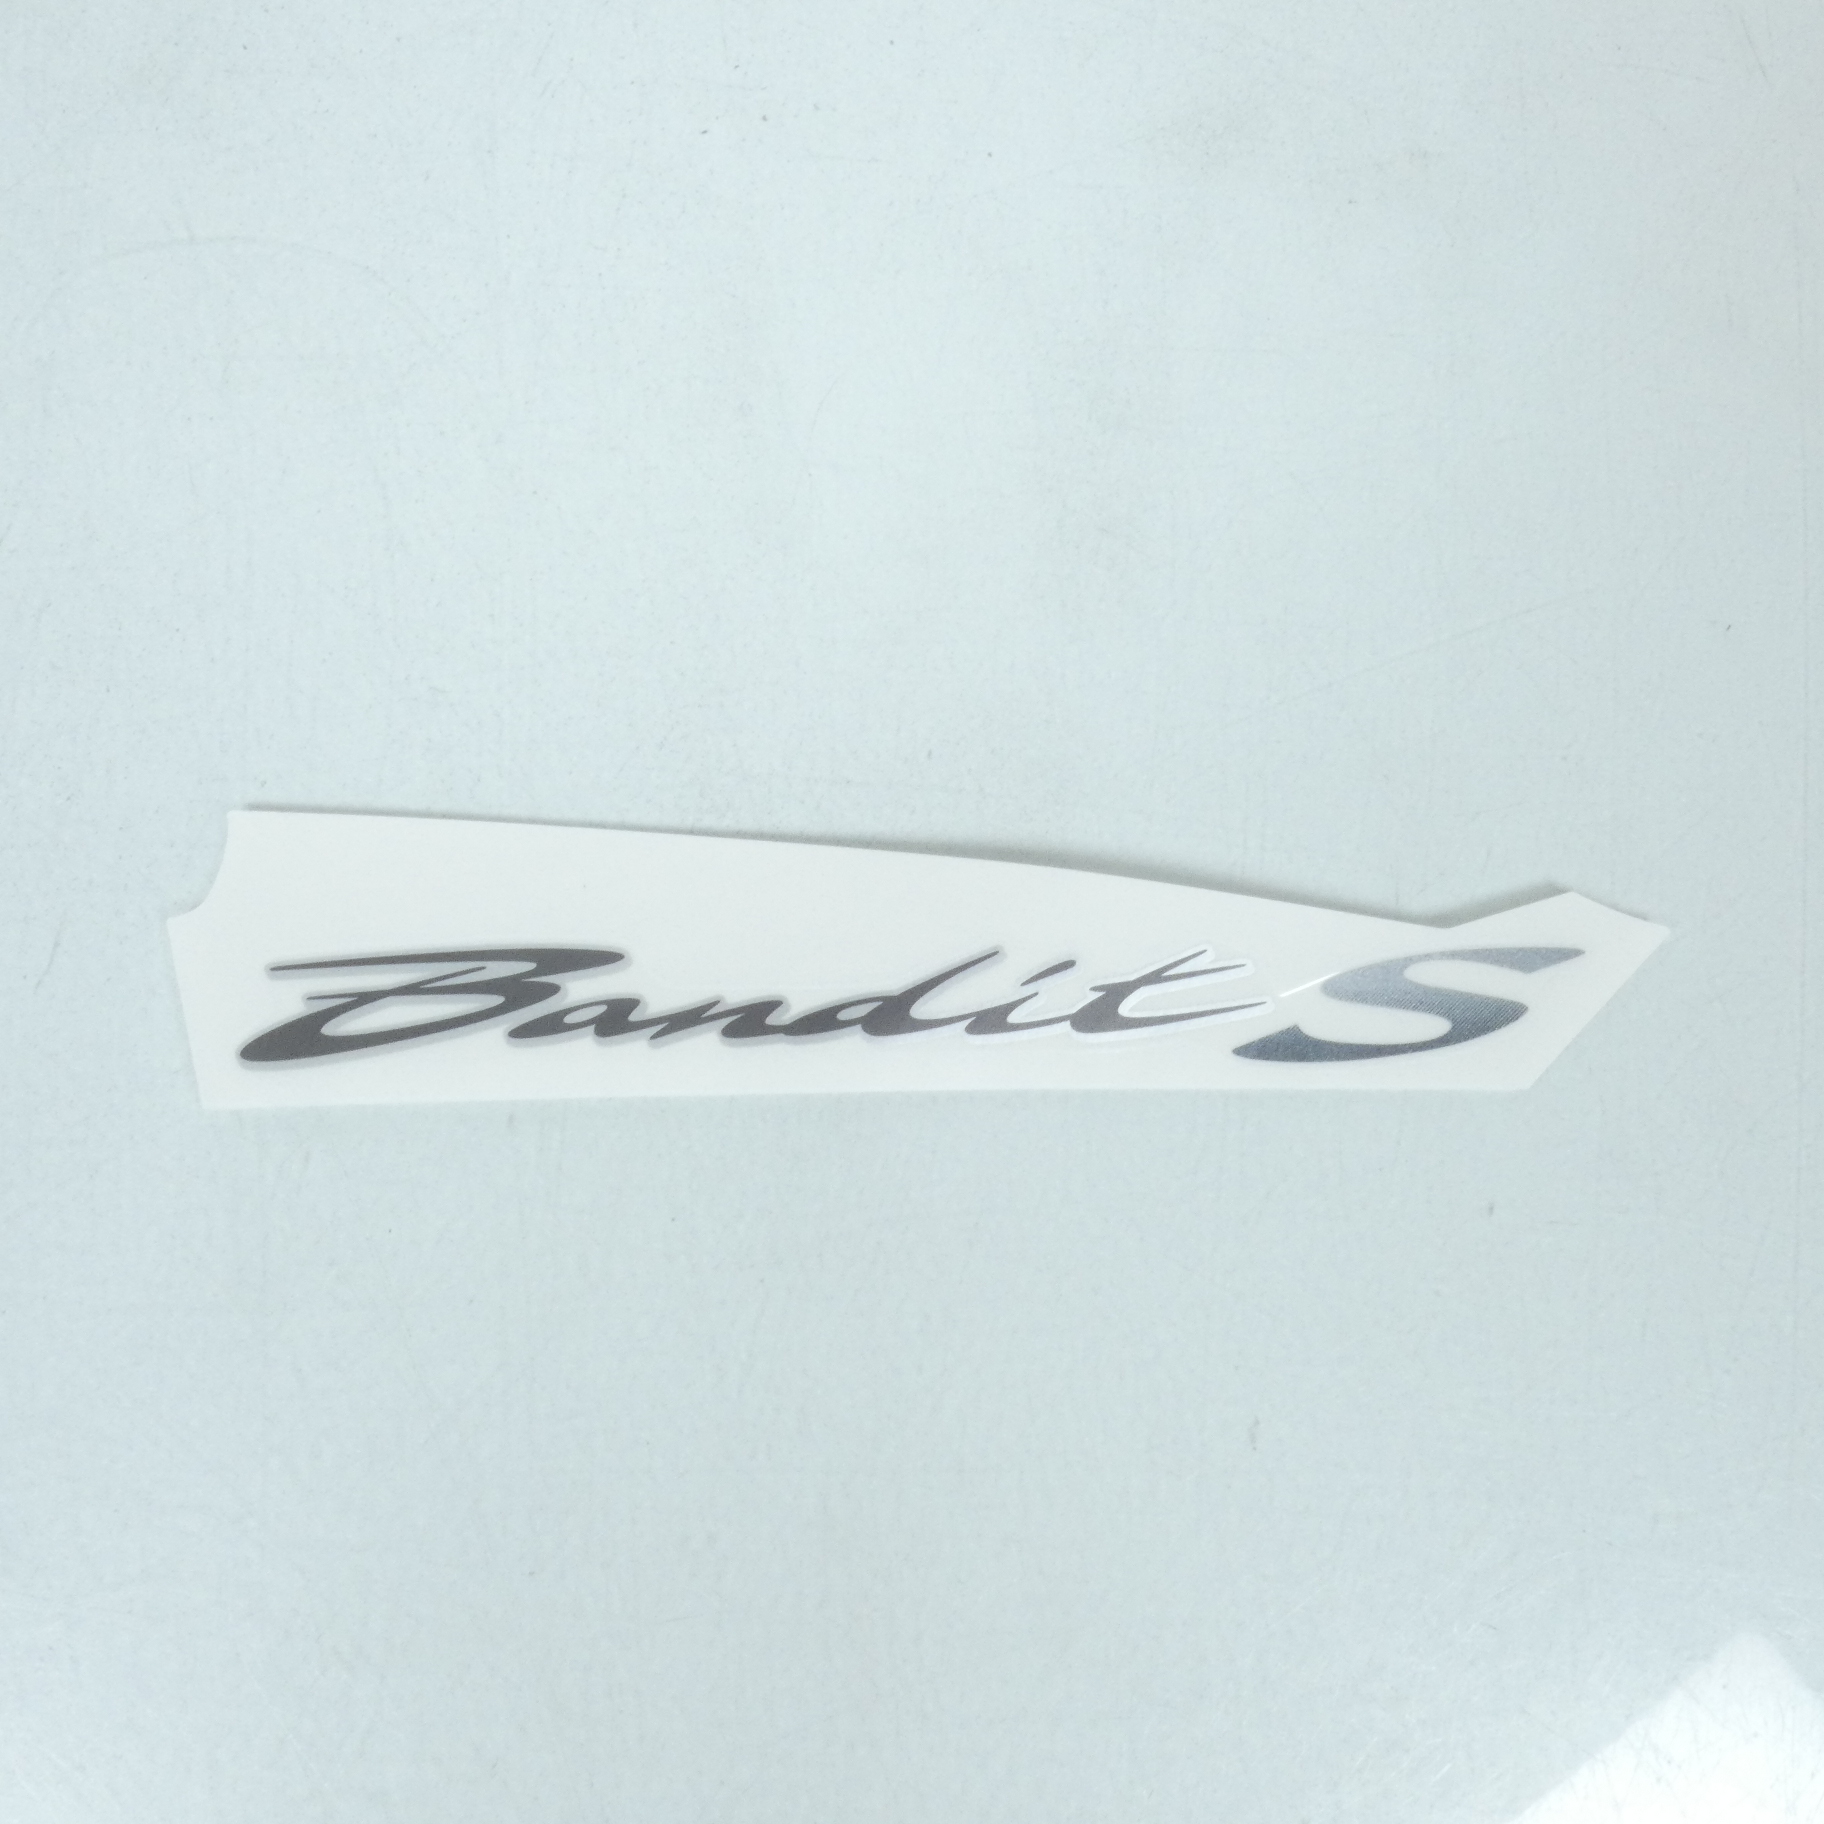 Autocollant stickers bandit S pour moto Suzuki Bandit 650 S 68281-38G01-EEY